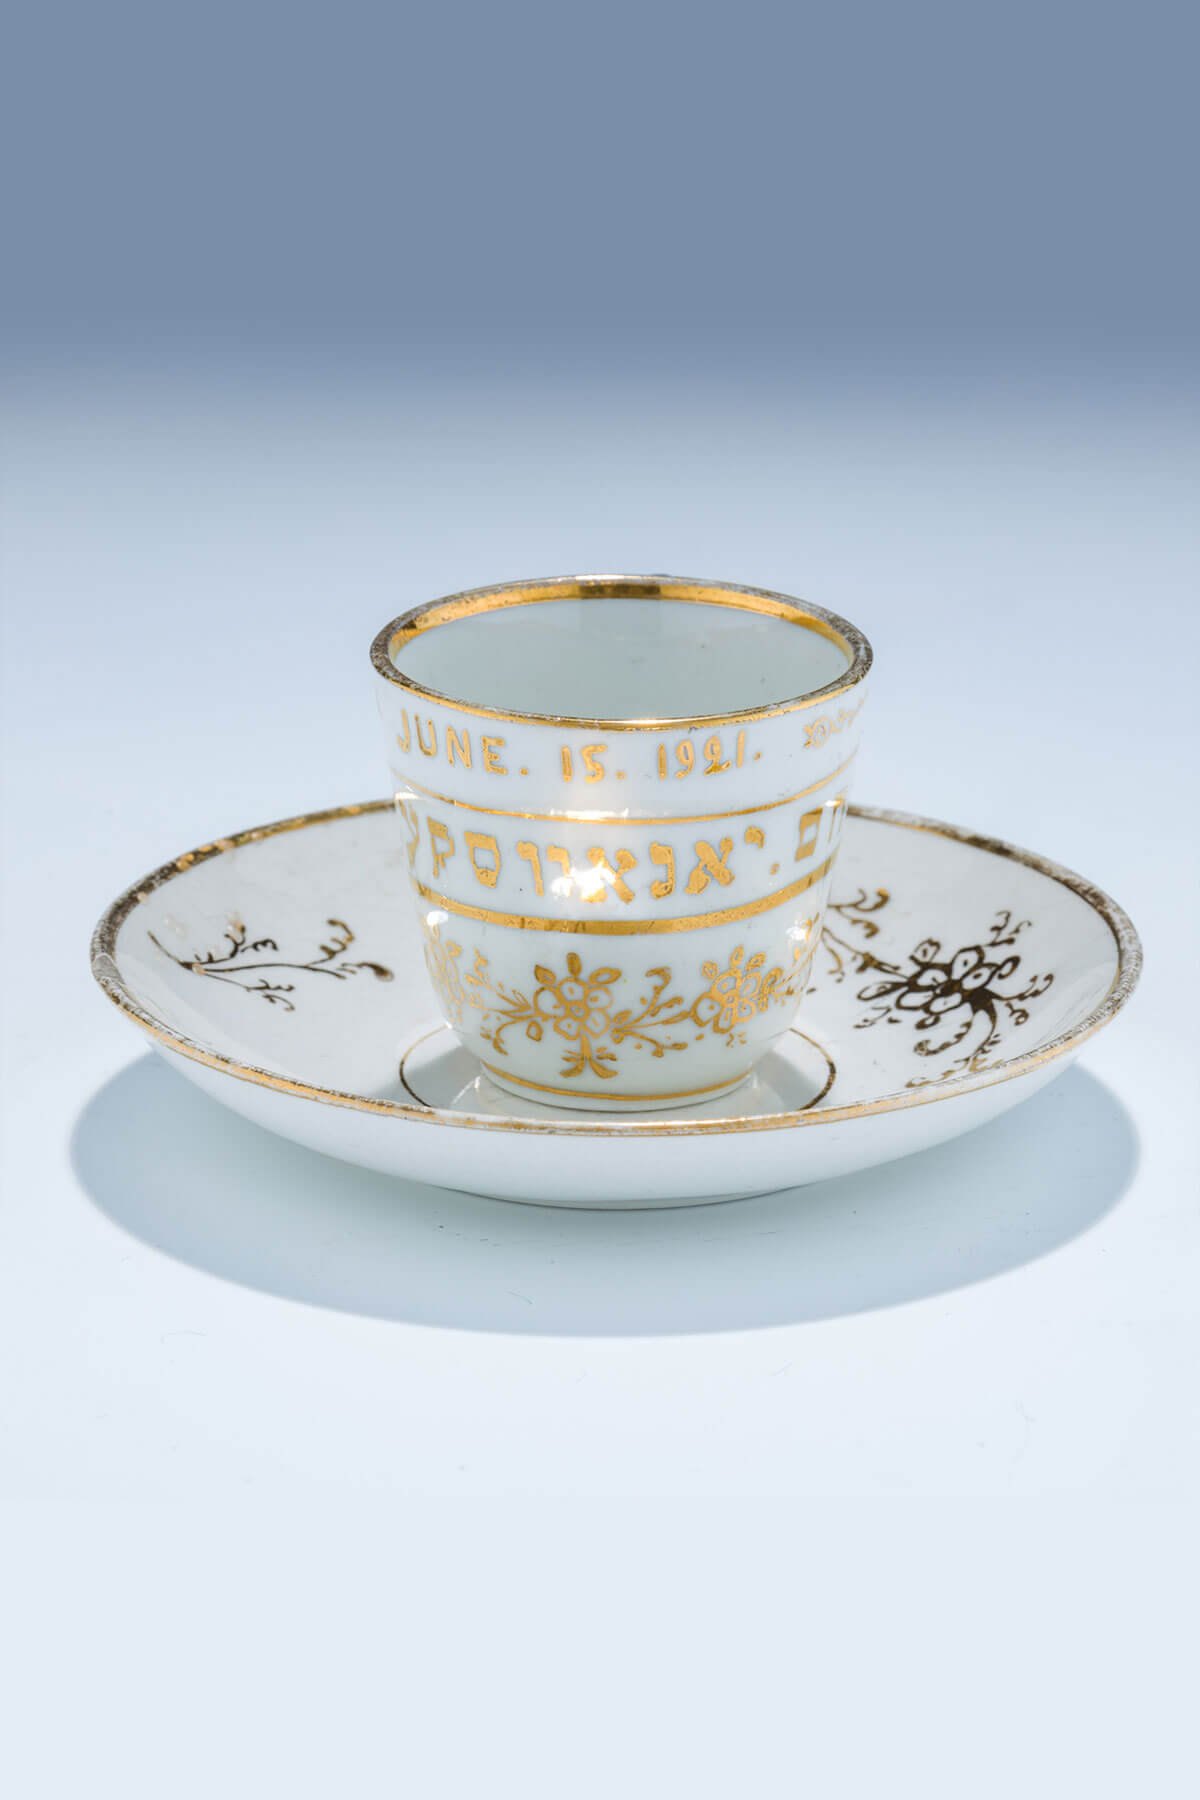 20. A Small Hebraic Tea Cup